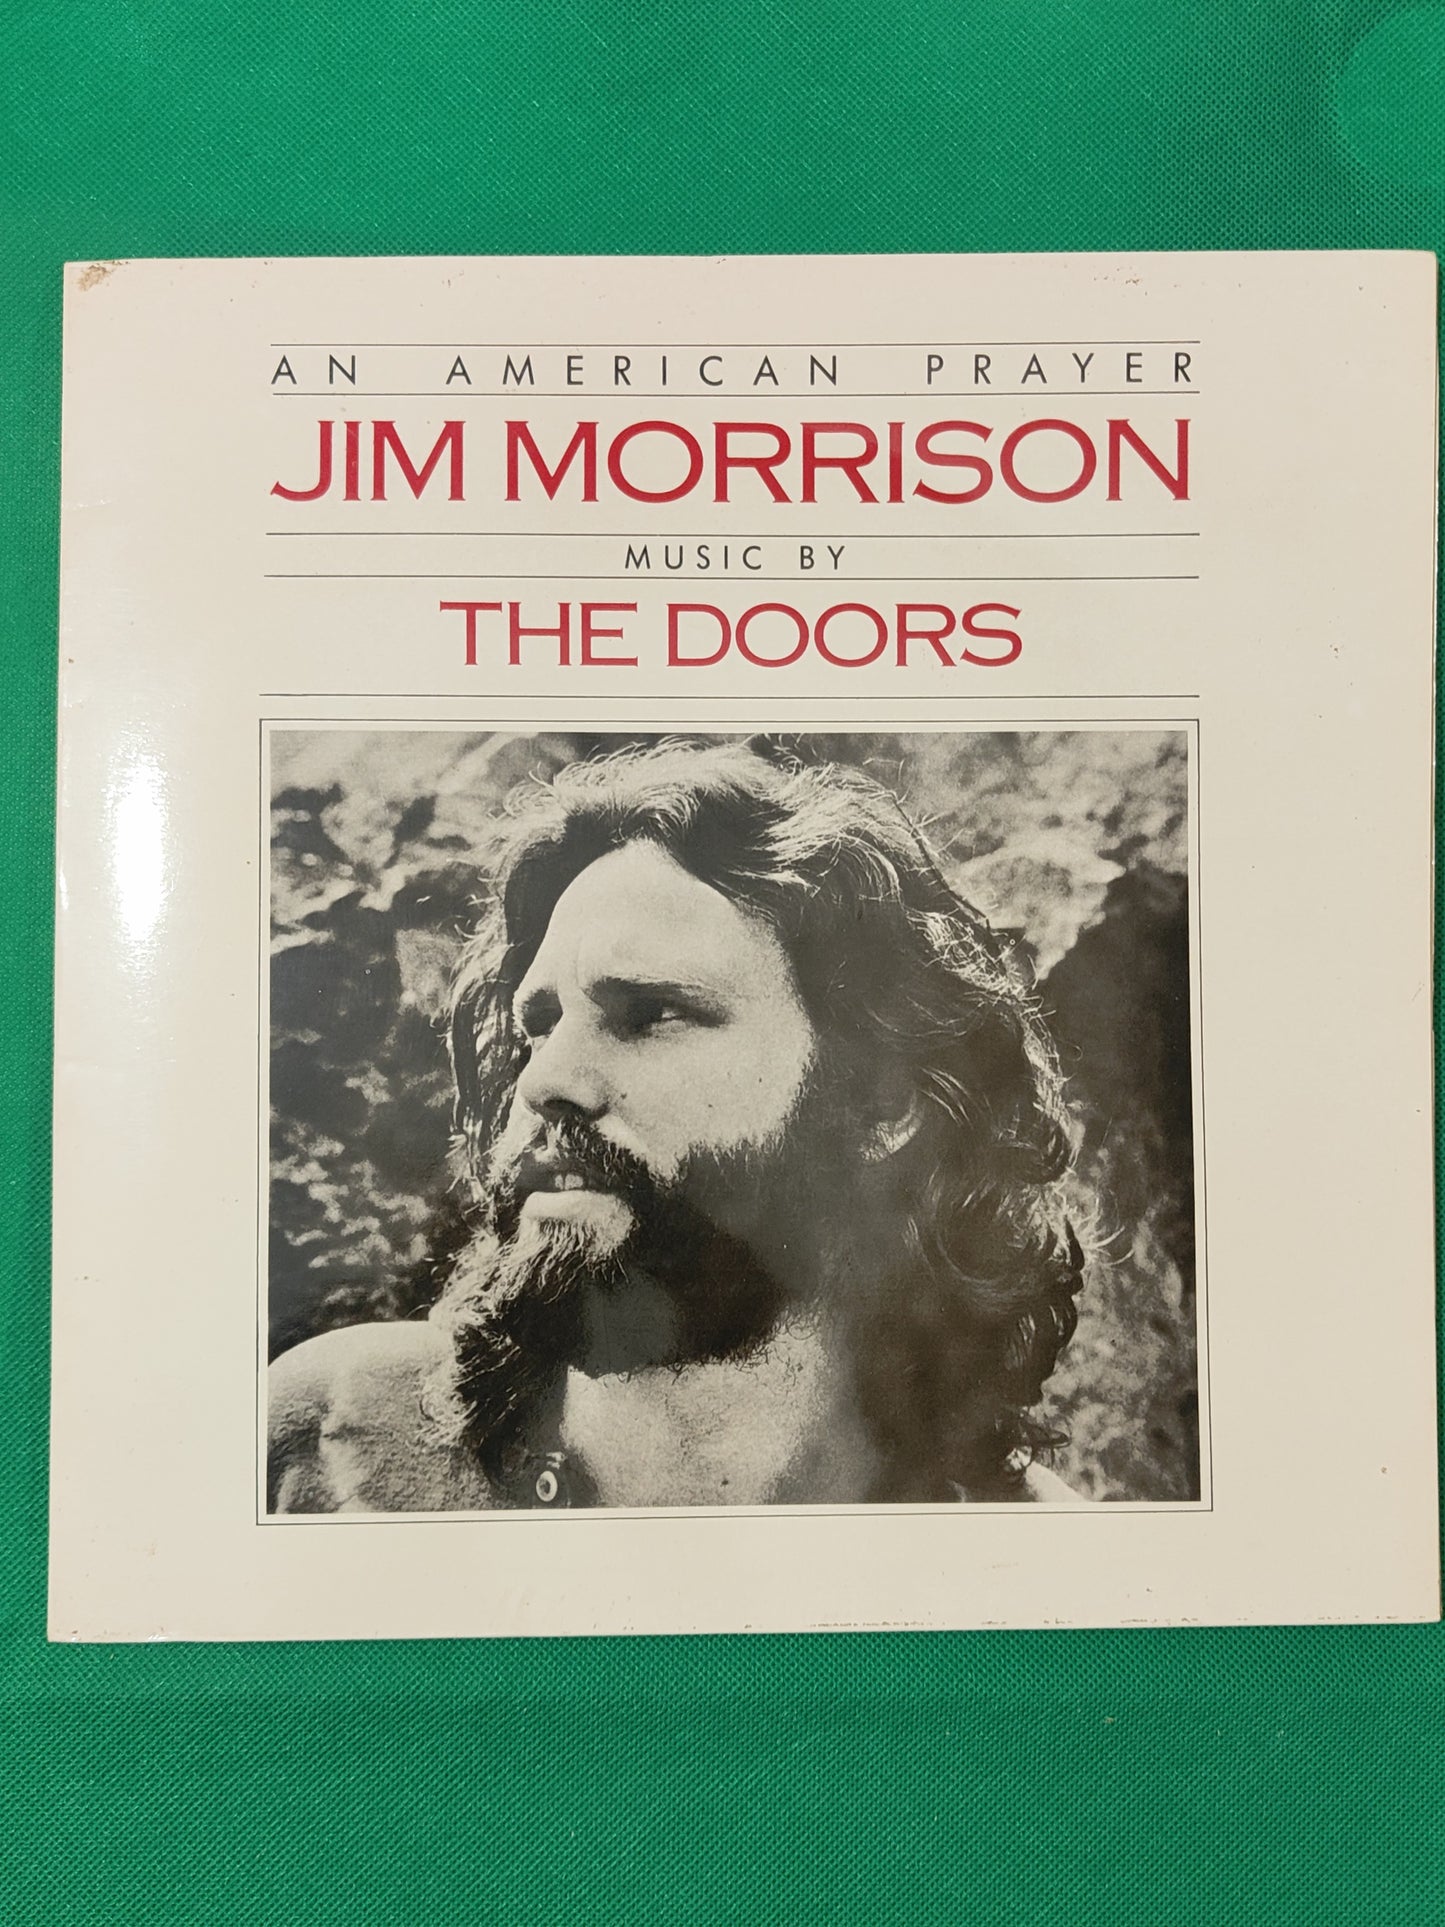 THE DOORS - An American Prayer (Jim Morrison)